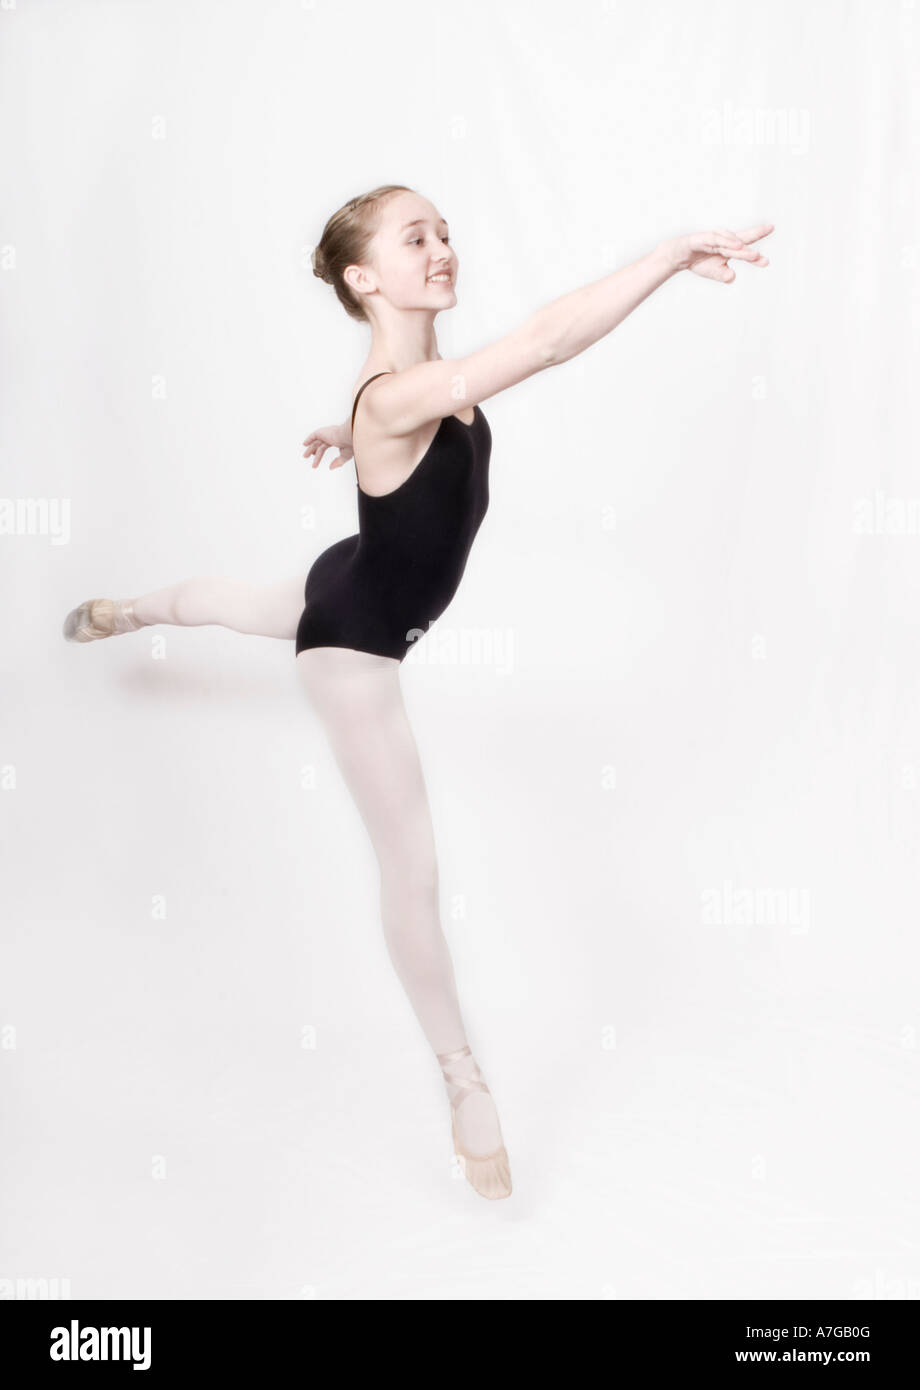 13-year old ballerina Stock Photo - Alamy